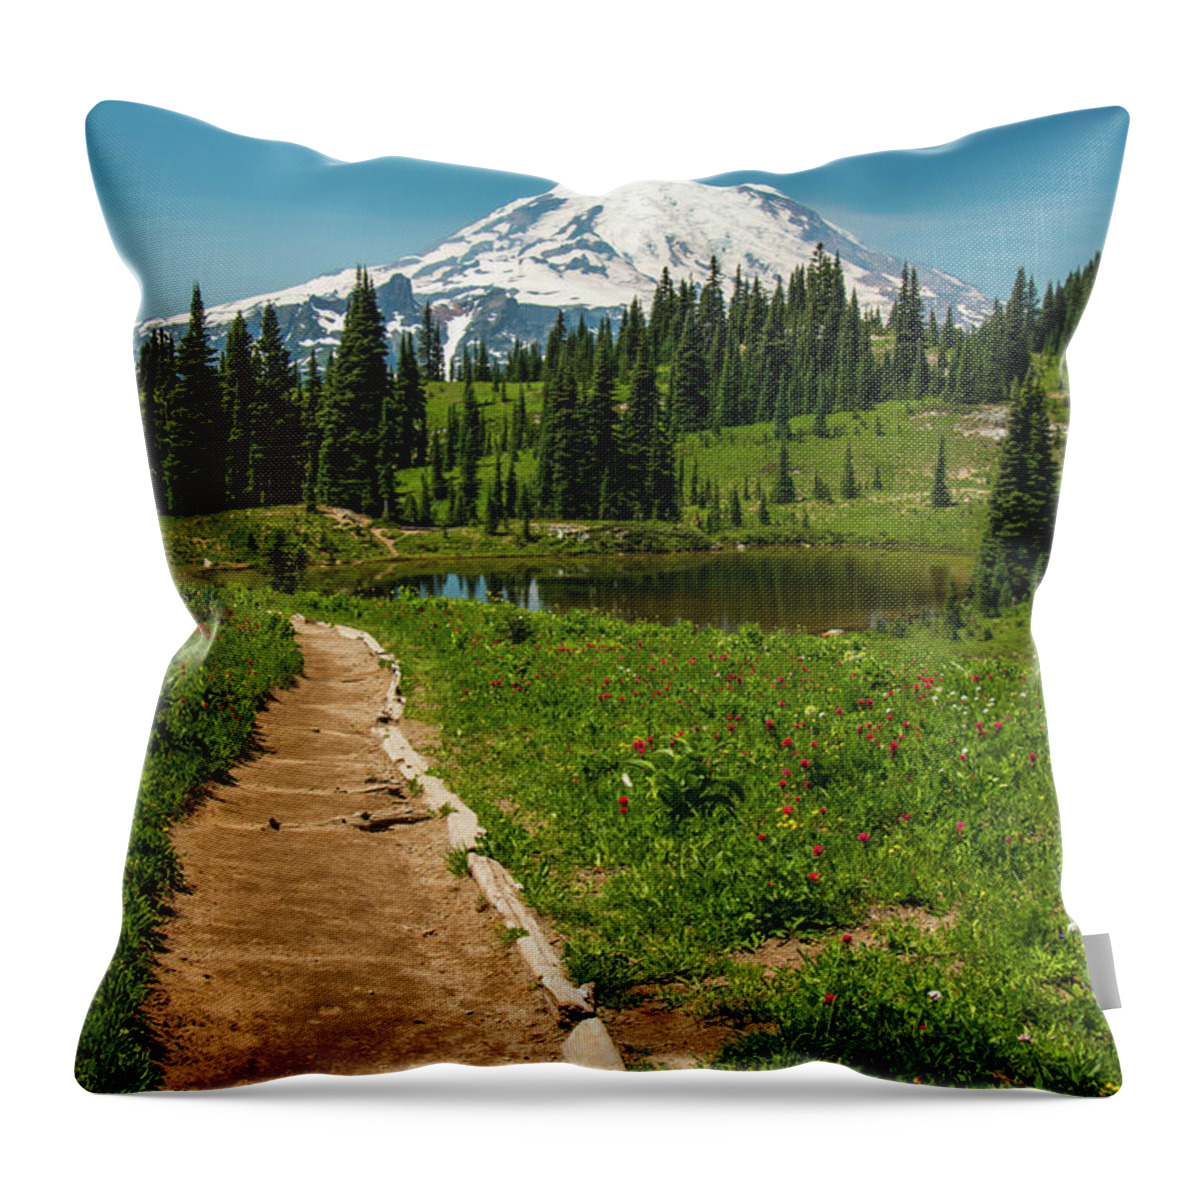 Mt Rainier National Park Throw Pillow featuring the photograph Finally Home by Doug Scrima